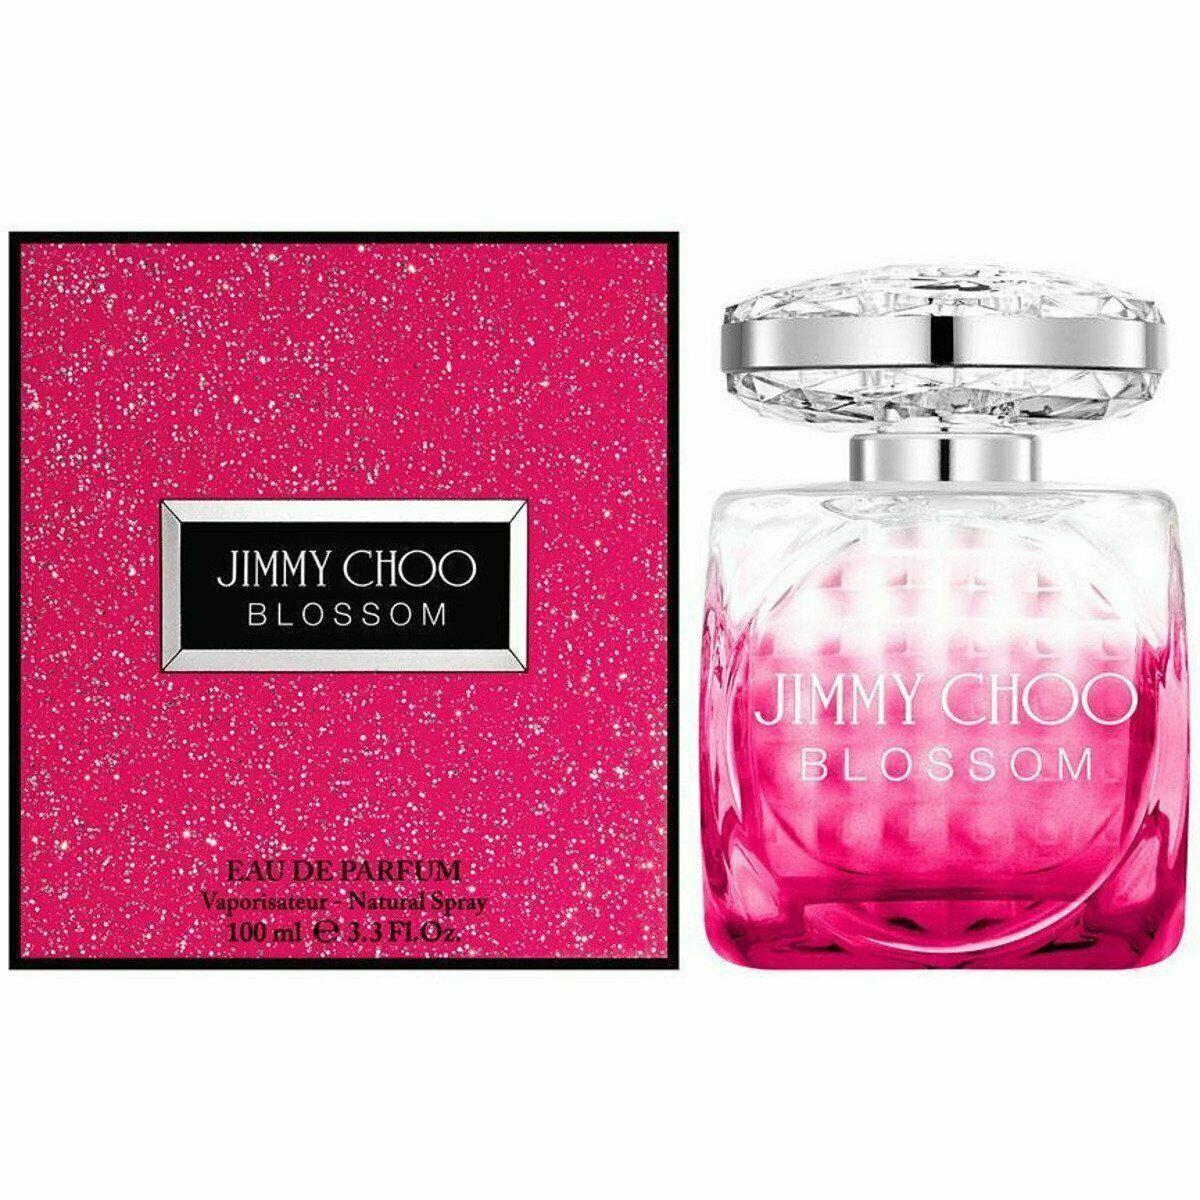 Jimmy Choo Blossom Perfume 3.3 Oz 100 ml Edp Eau De Parfum Spray Women